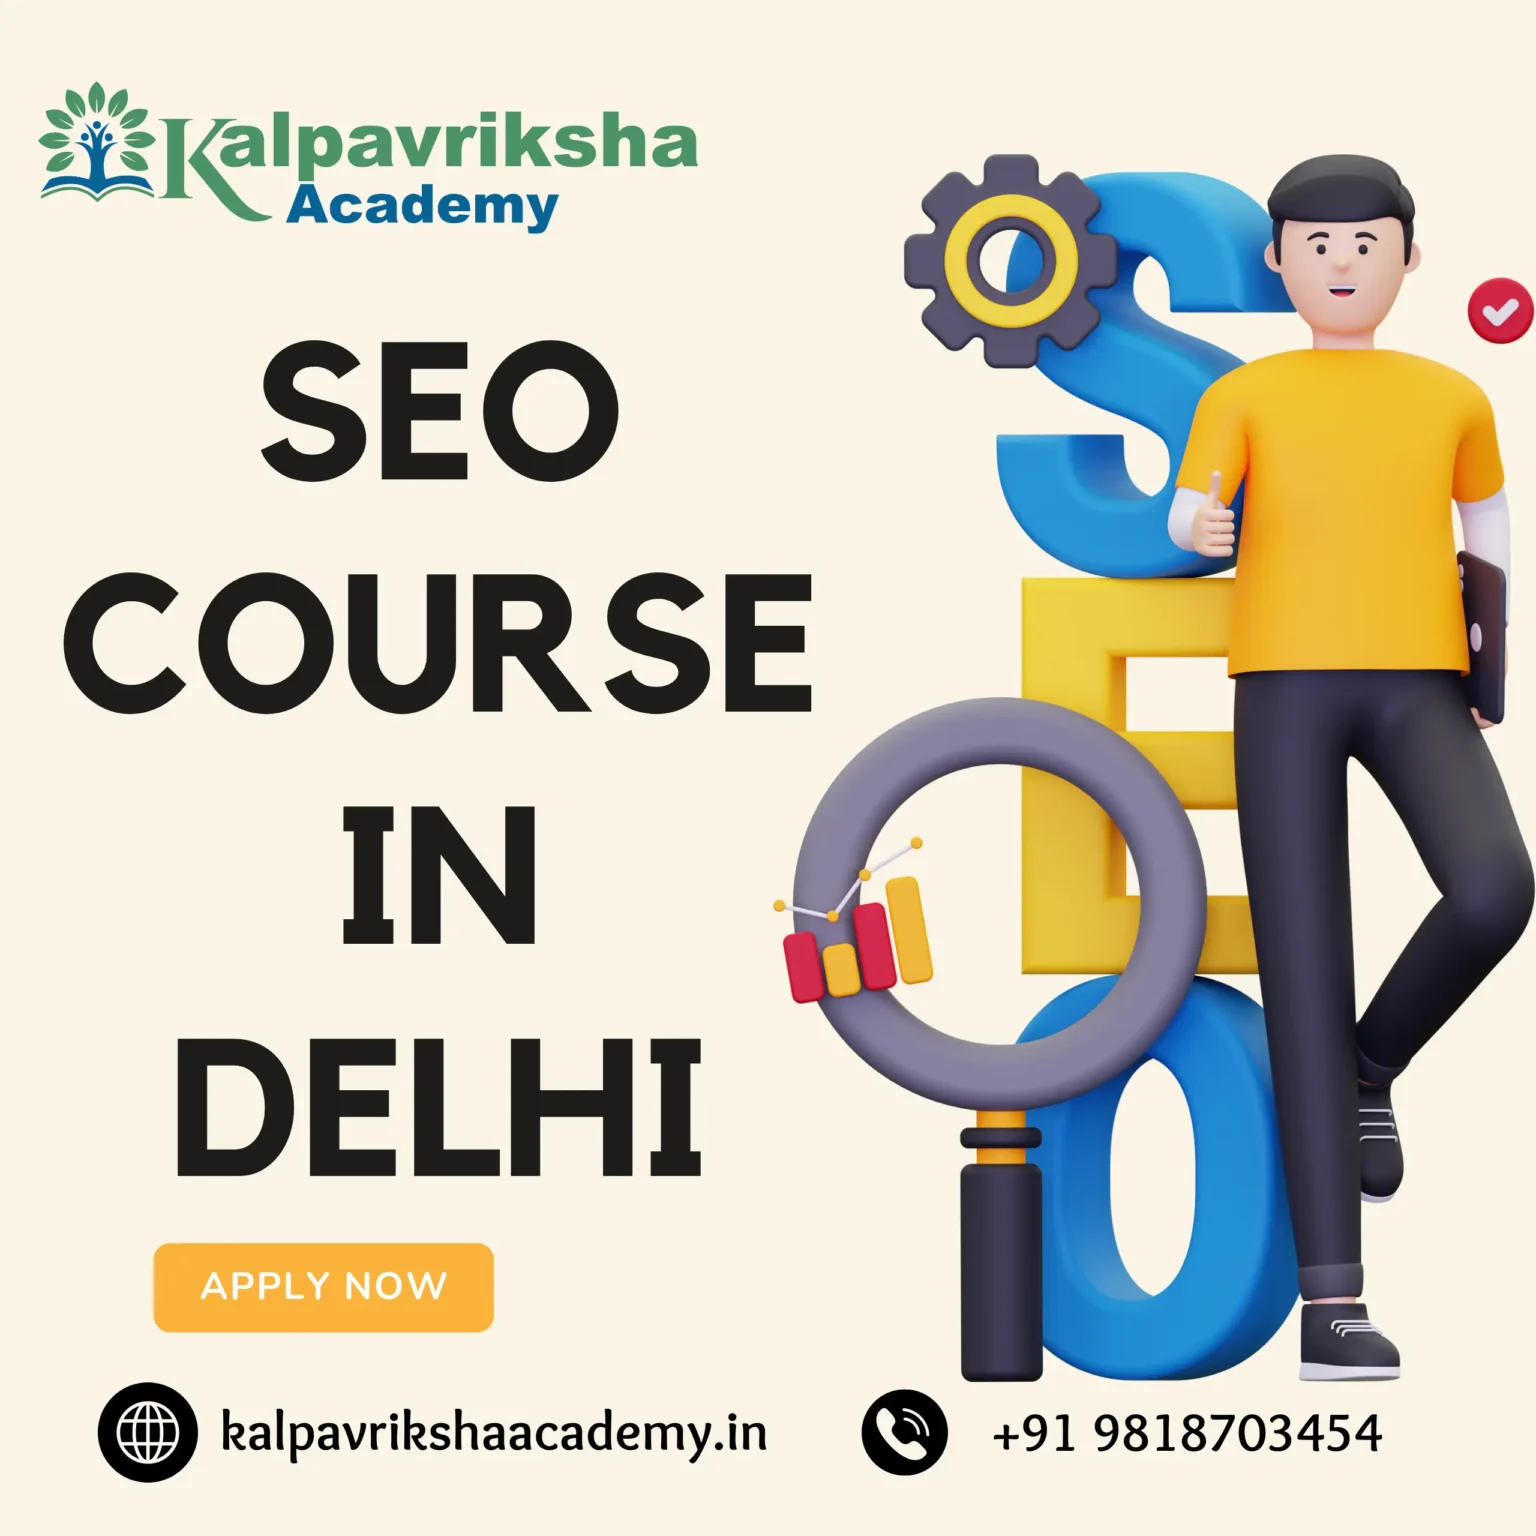 Advanced SEO Course In Delhi - Kalpavriksha Academy